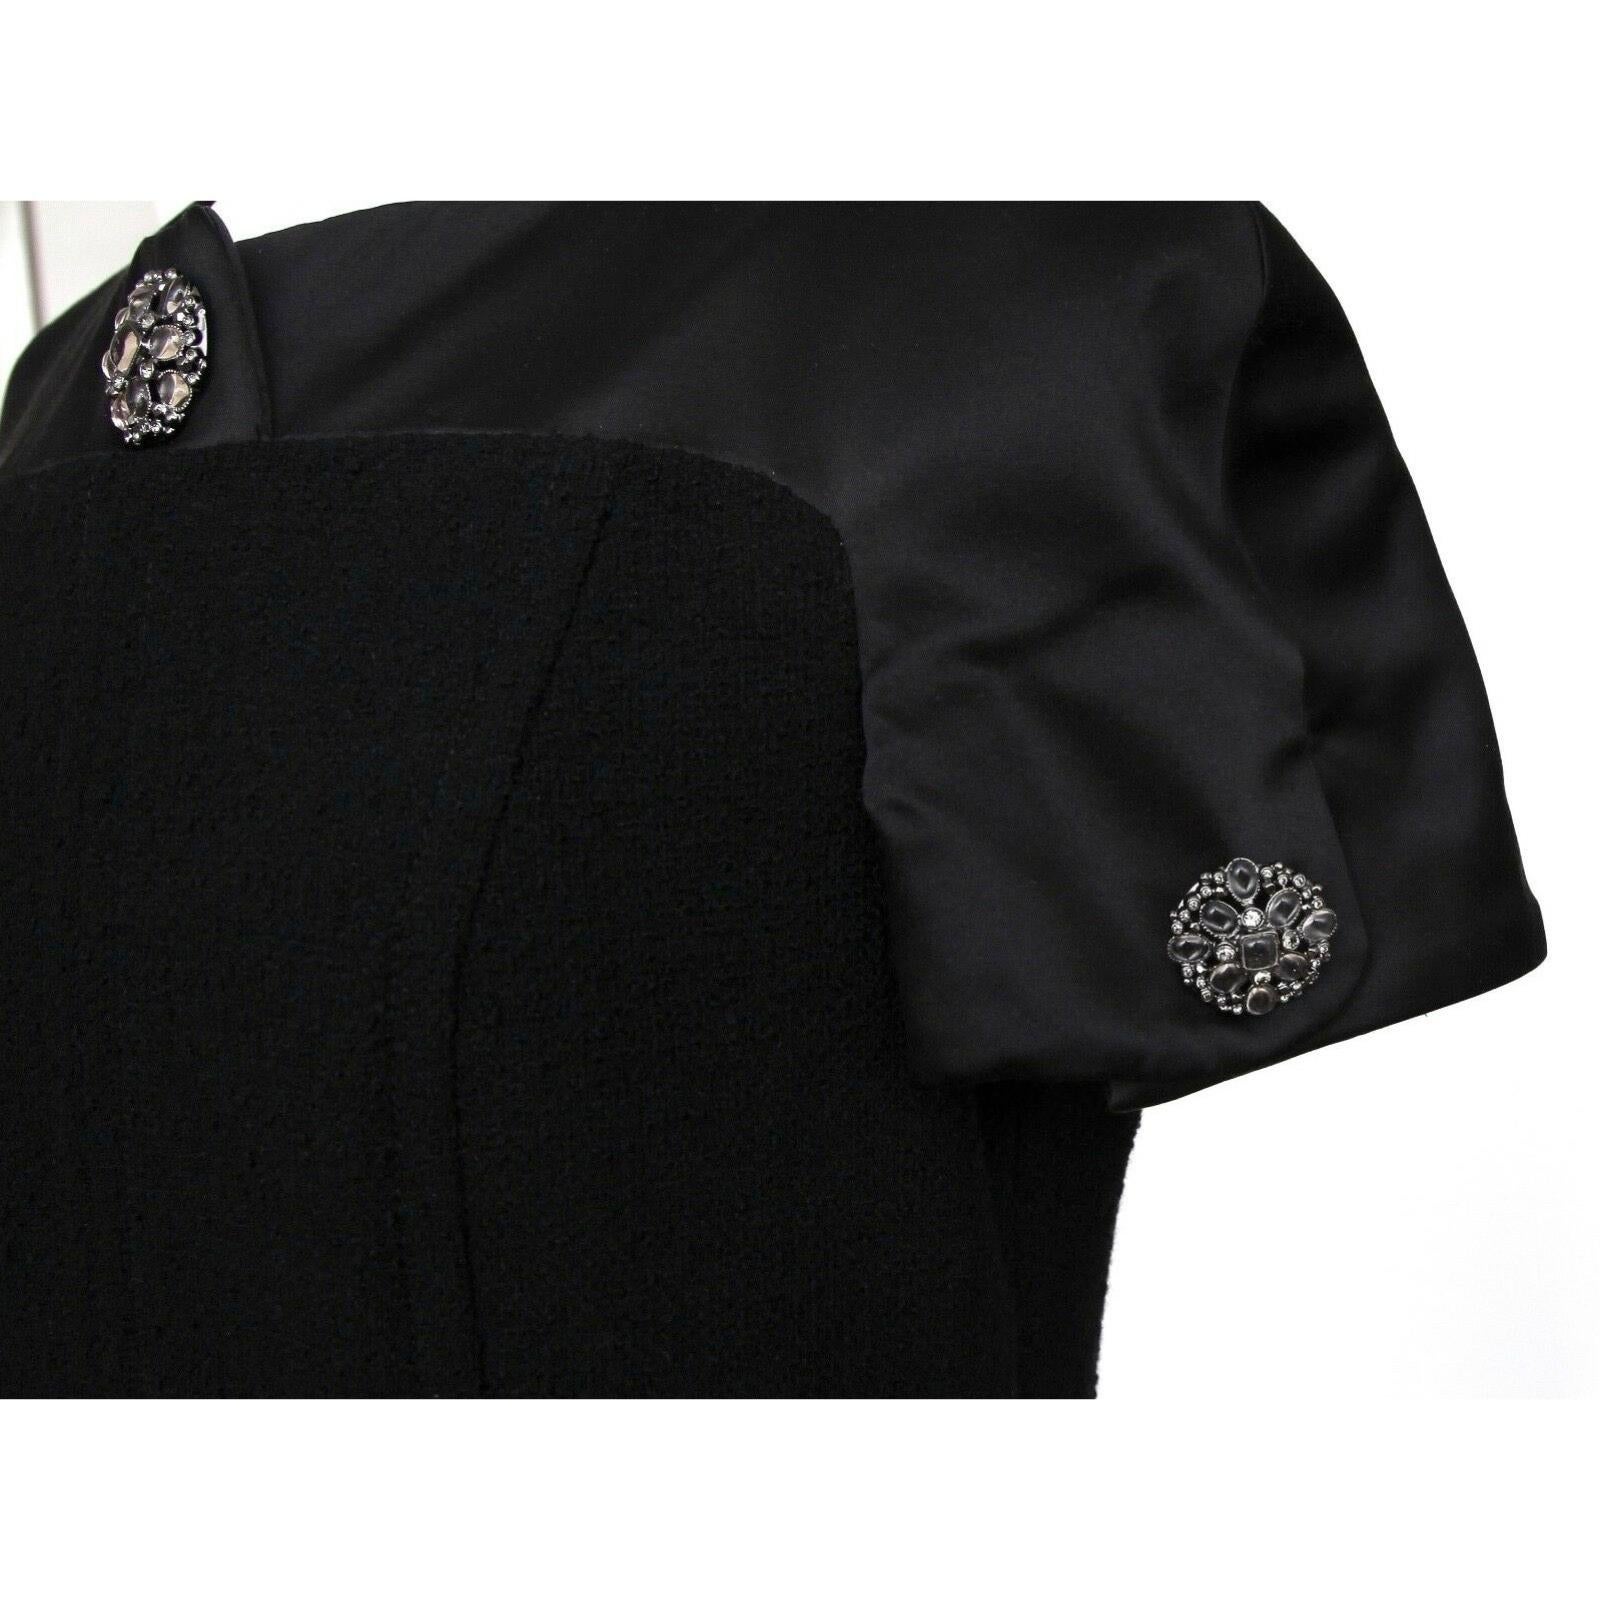 CHANEL Dress Wool Blend Black Satin Shift Cap Sleeve Gripoix Sz 38 2015 For Sale 1